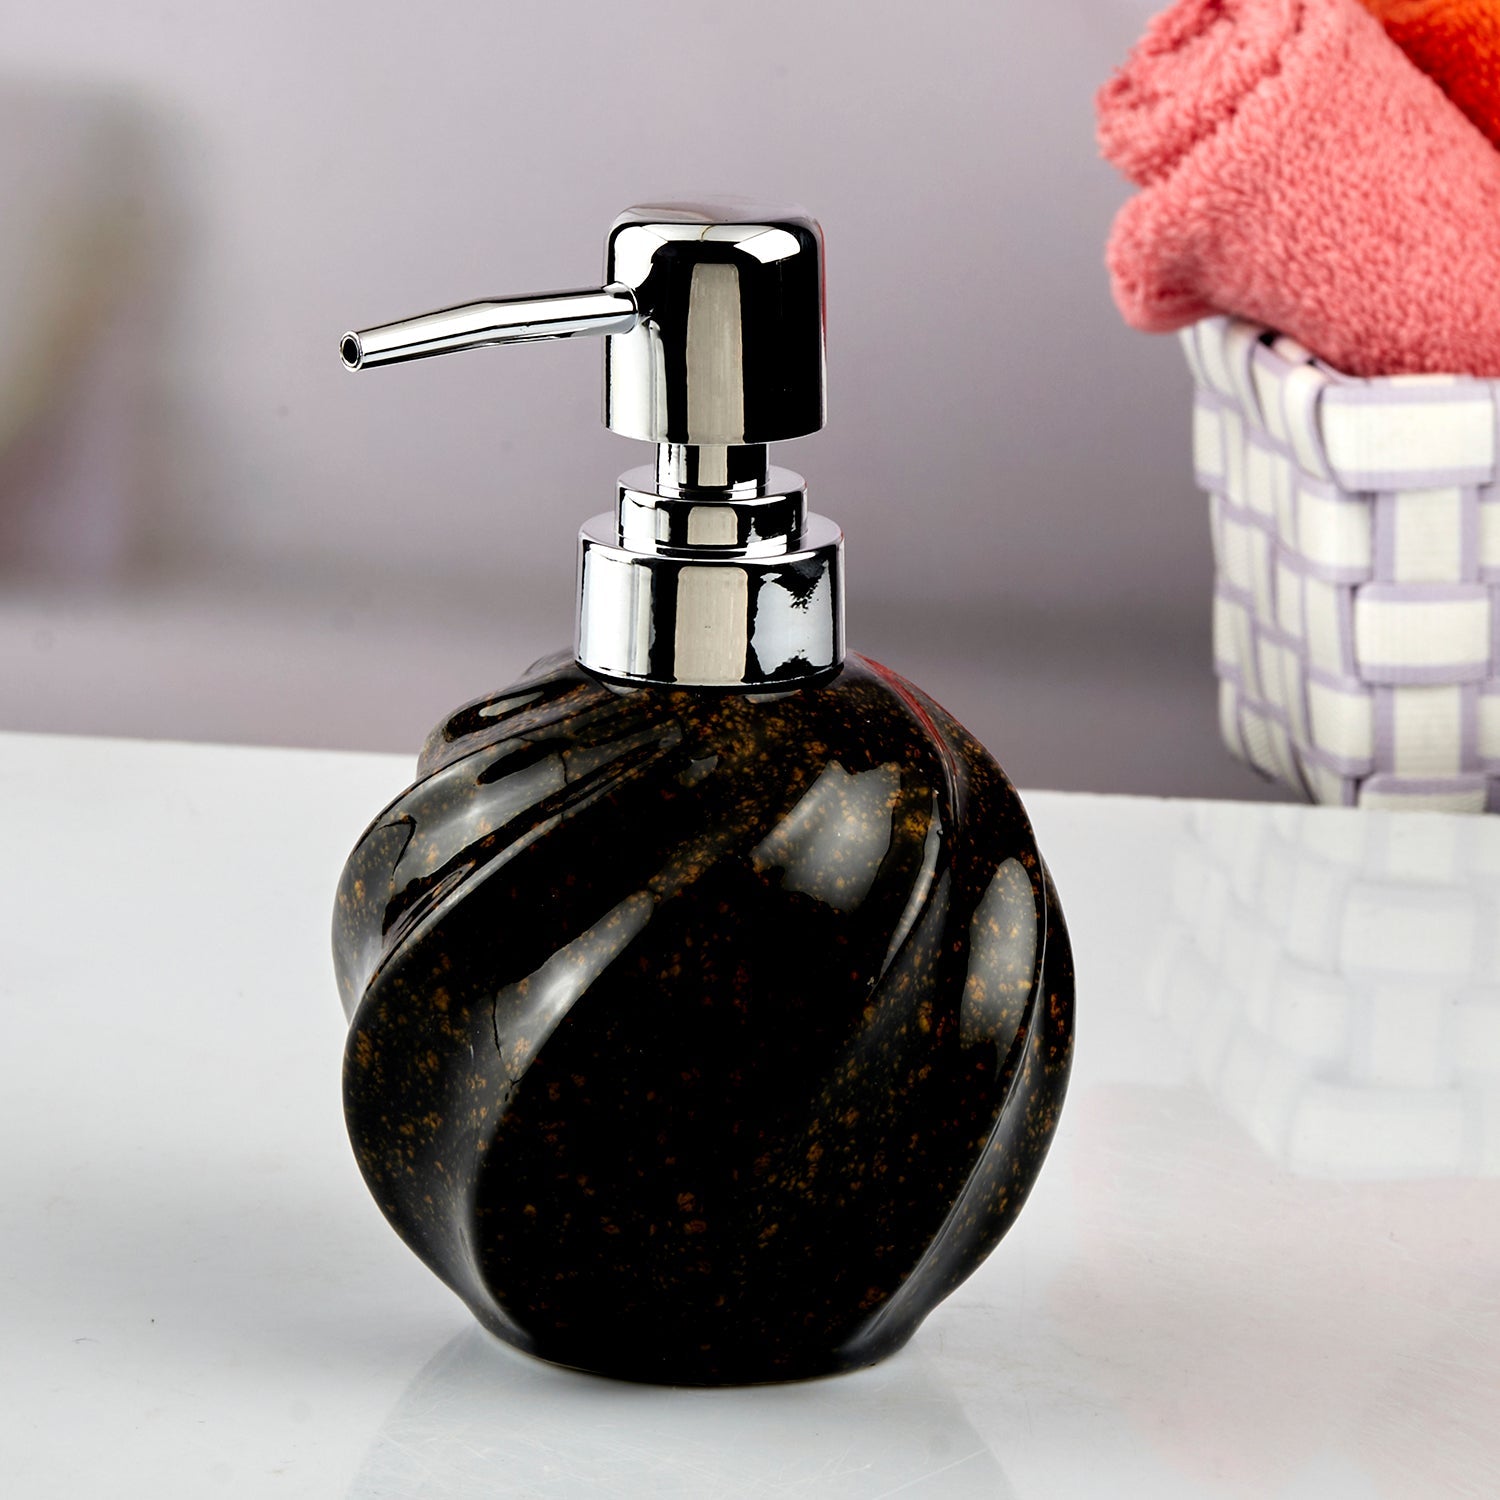 Ceramic Soap Dispenser liquid handwash pump for Bathroom, Set of 1, Black (10742)